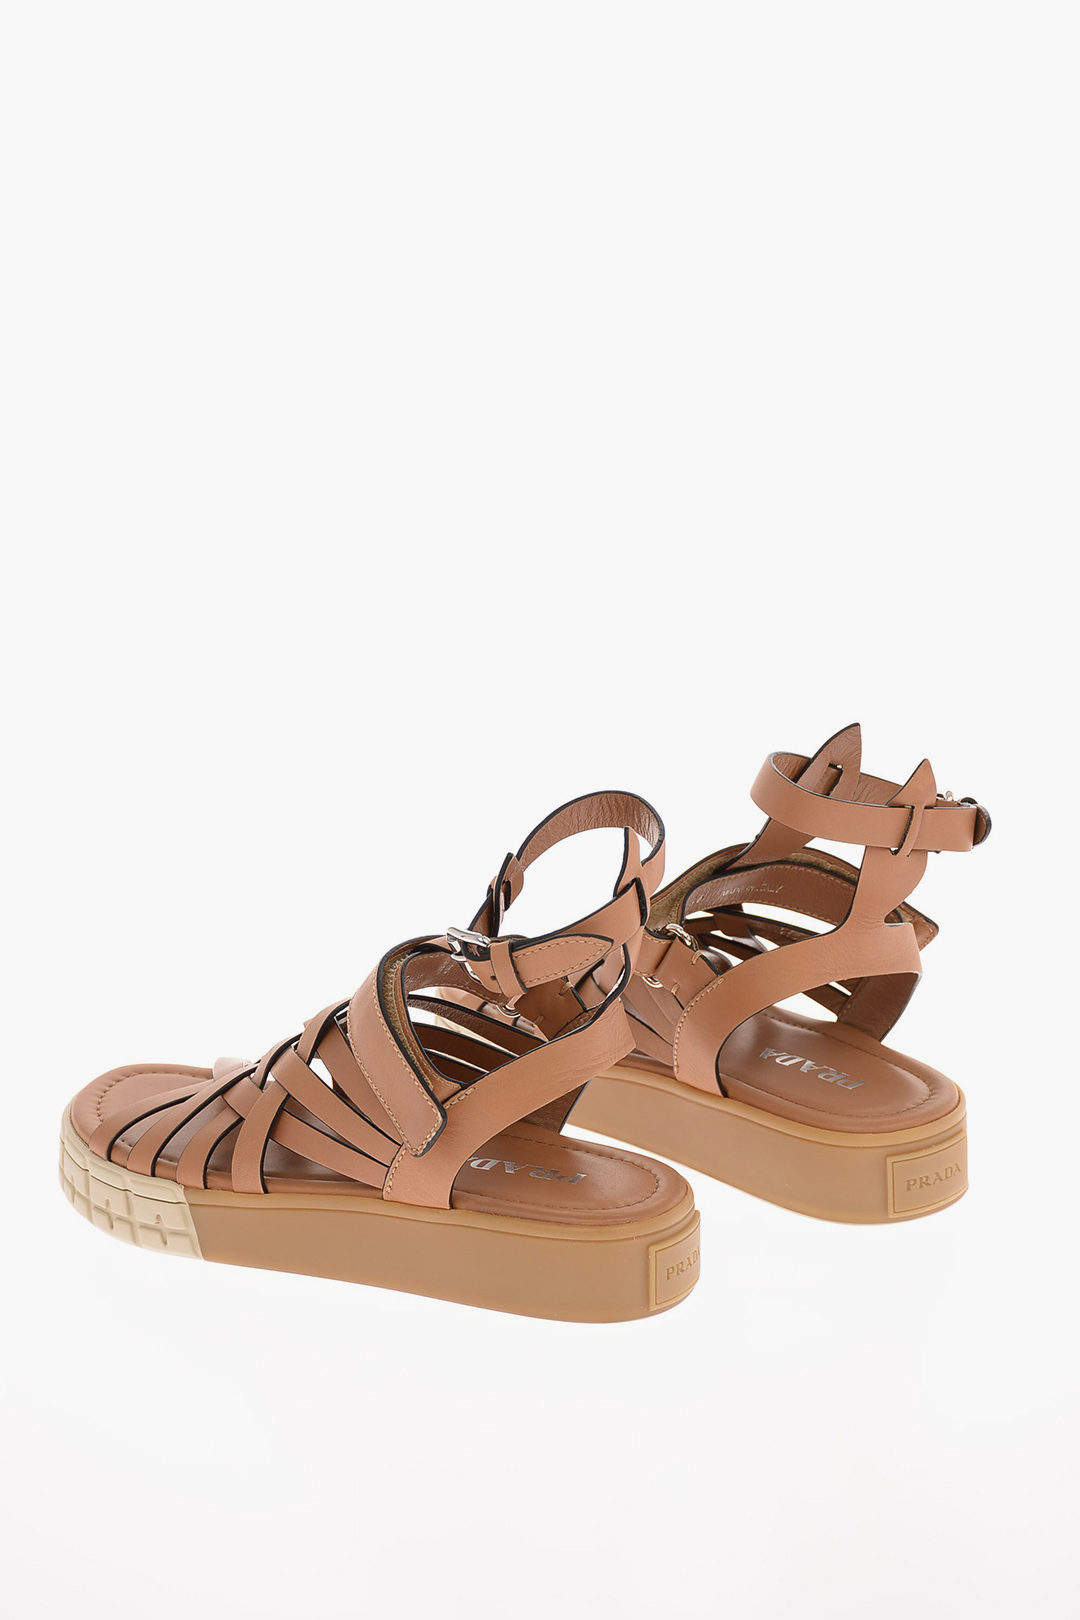 Prada Braided Leather Sandals with Platform 3 Cm women - Glamood Outlet